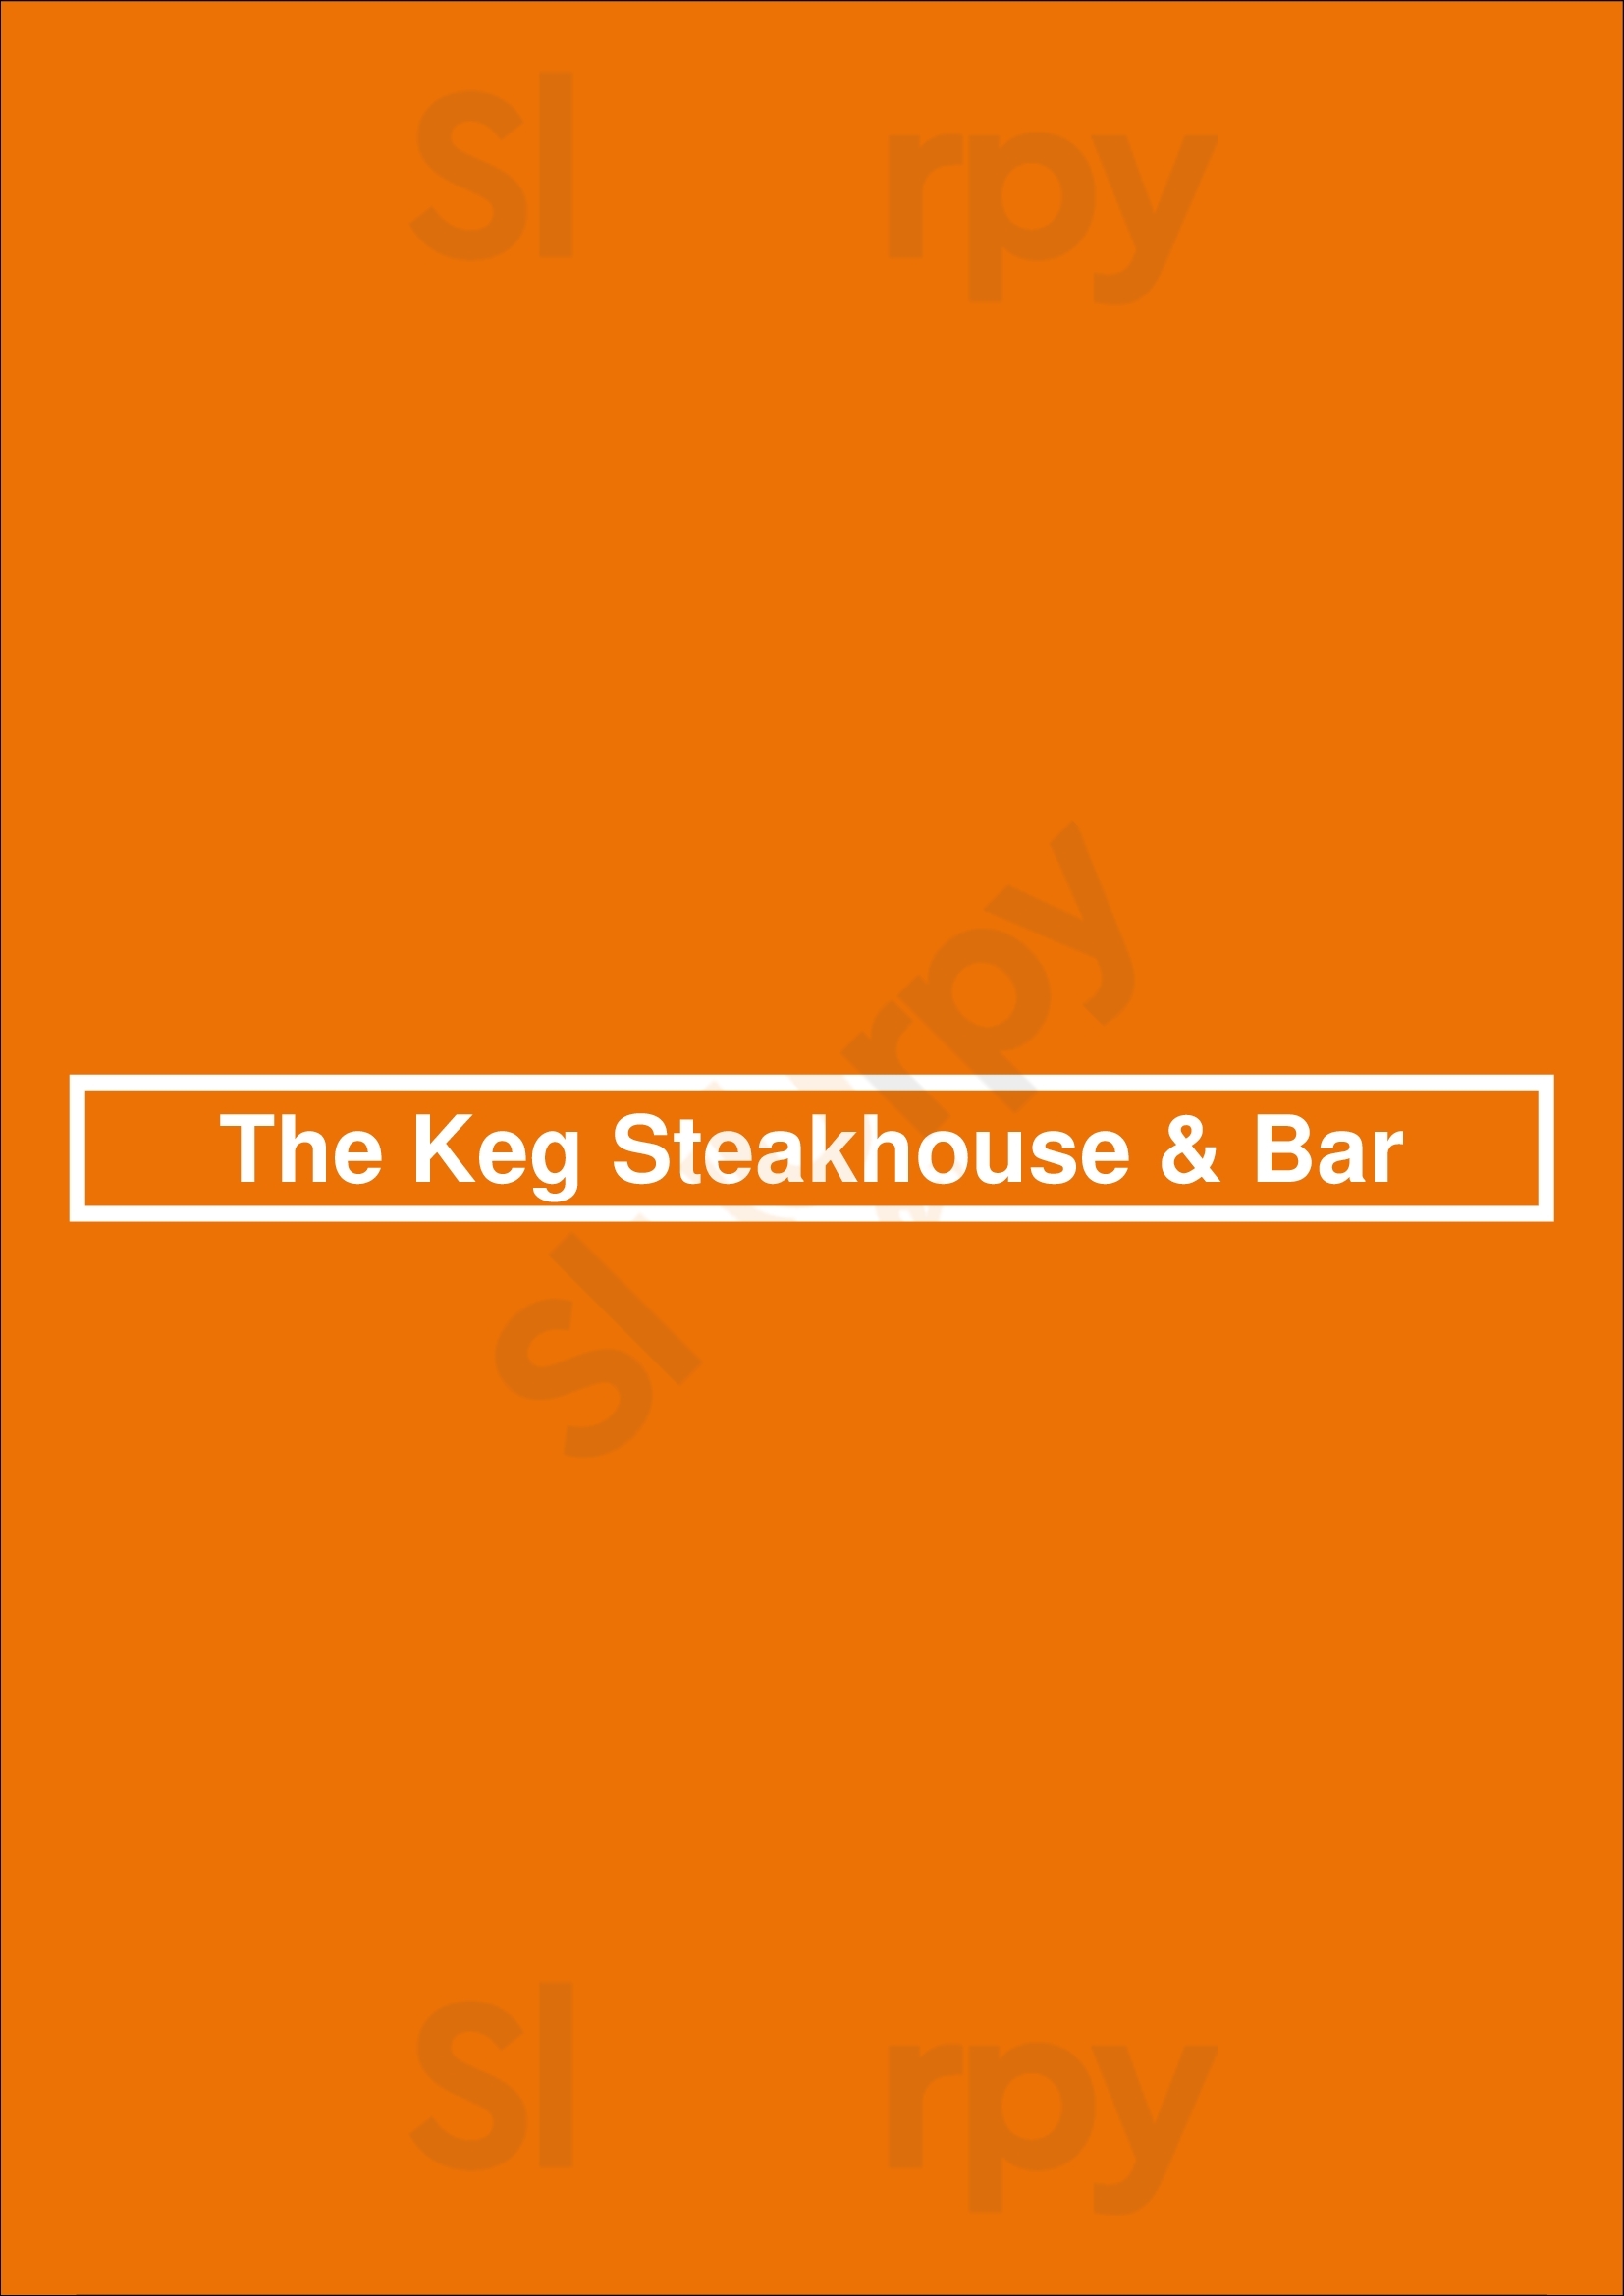 The Keg Steakhouse + Bar - Mississauga Heartland Mississauga Menu - 1